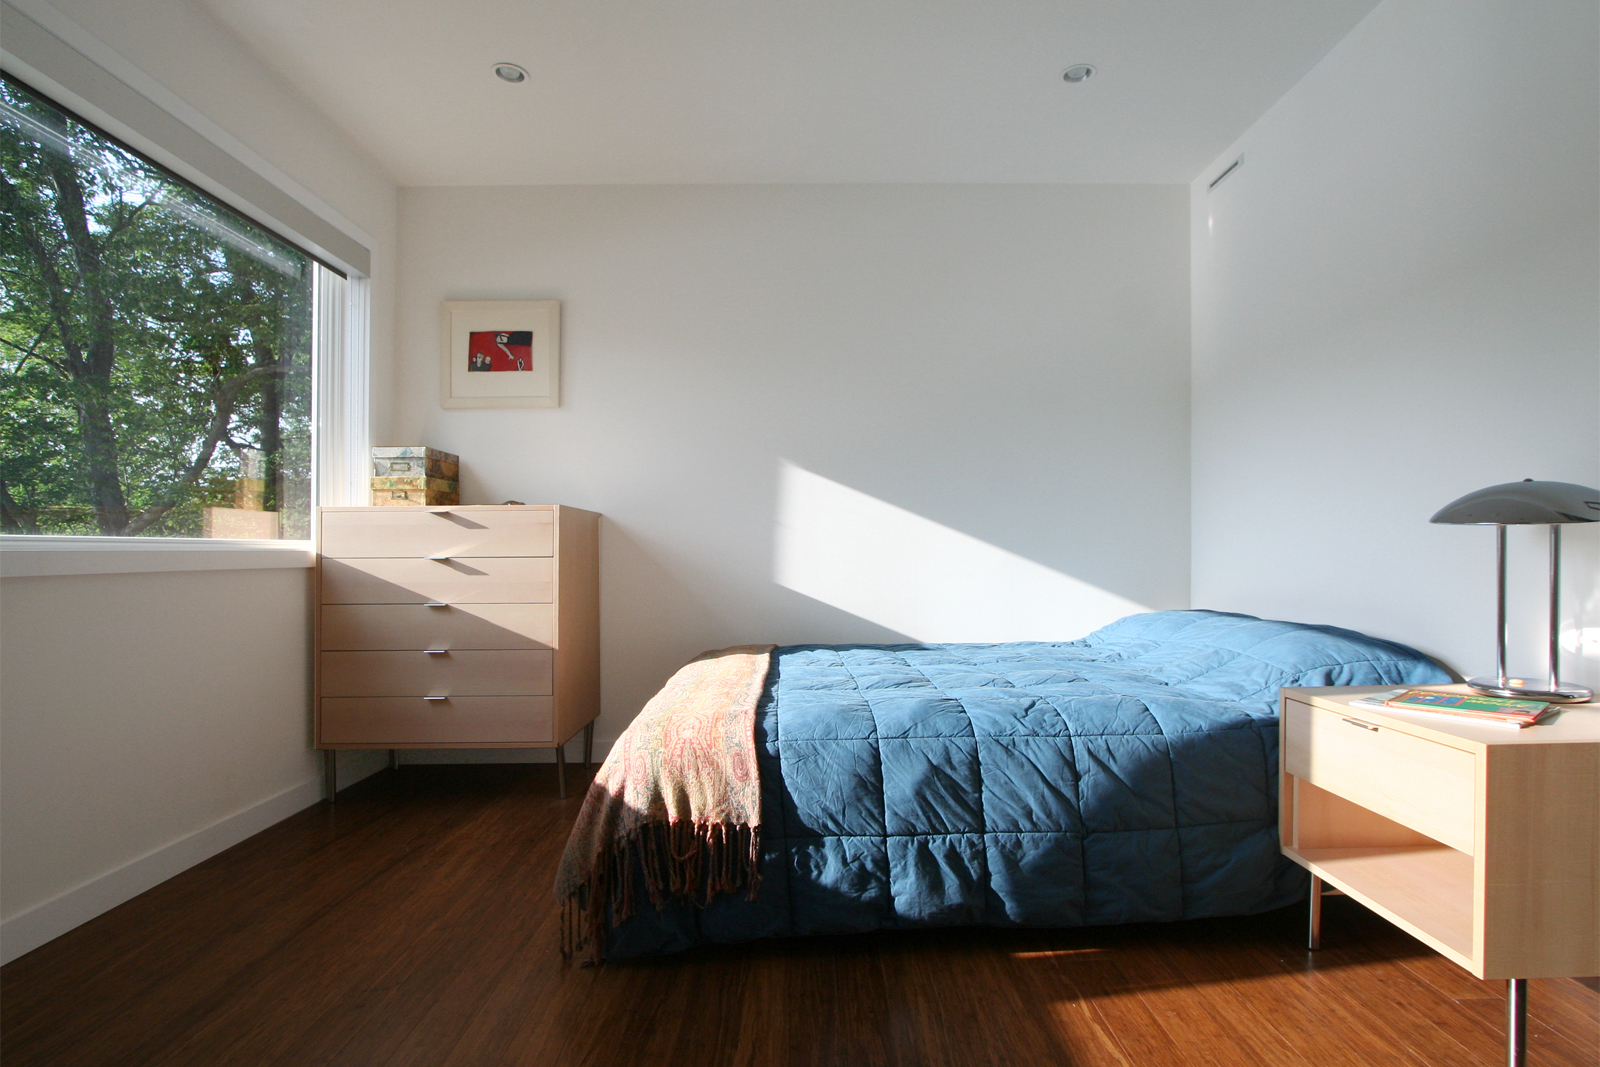 15-res4-resolution-4-architecture-modern-modular-home-prefab-house-lake-iosco-interior-bedroom.JPG